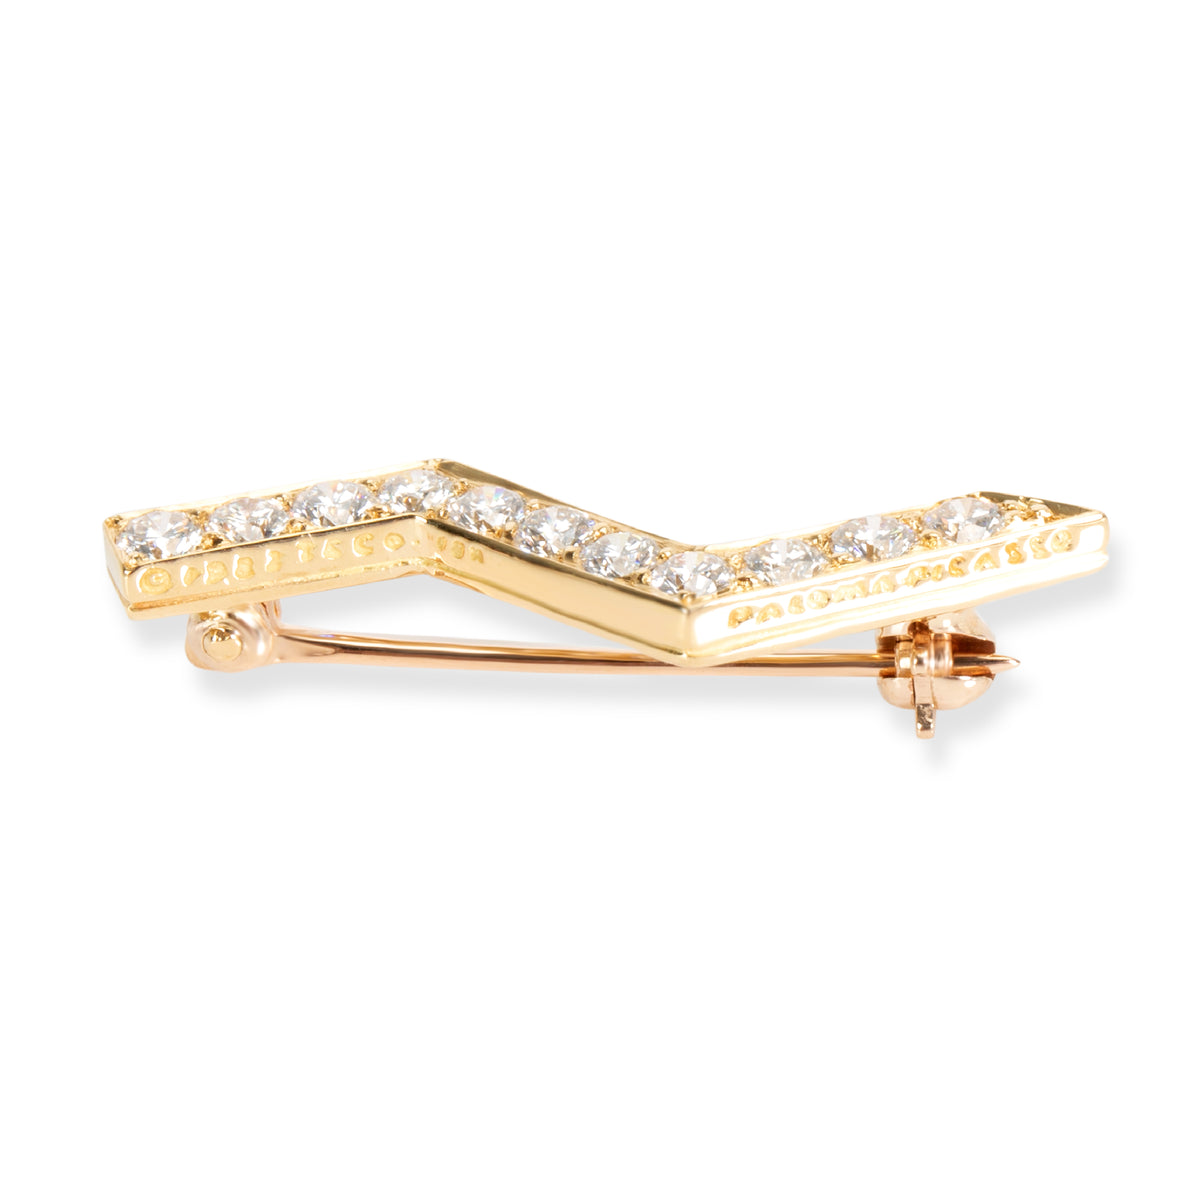 Tiffany & Co. Paloma Picasso Vintage Diamond Lightning Bolt Brooch in 18K Gold